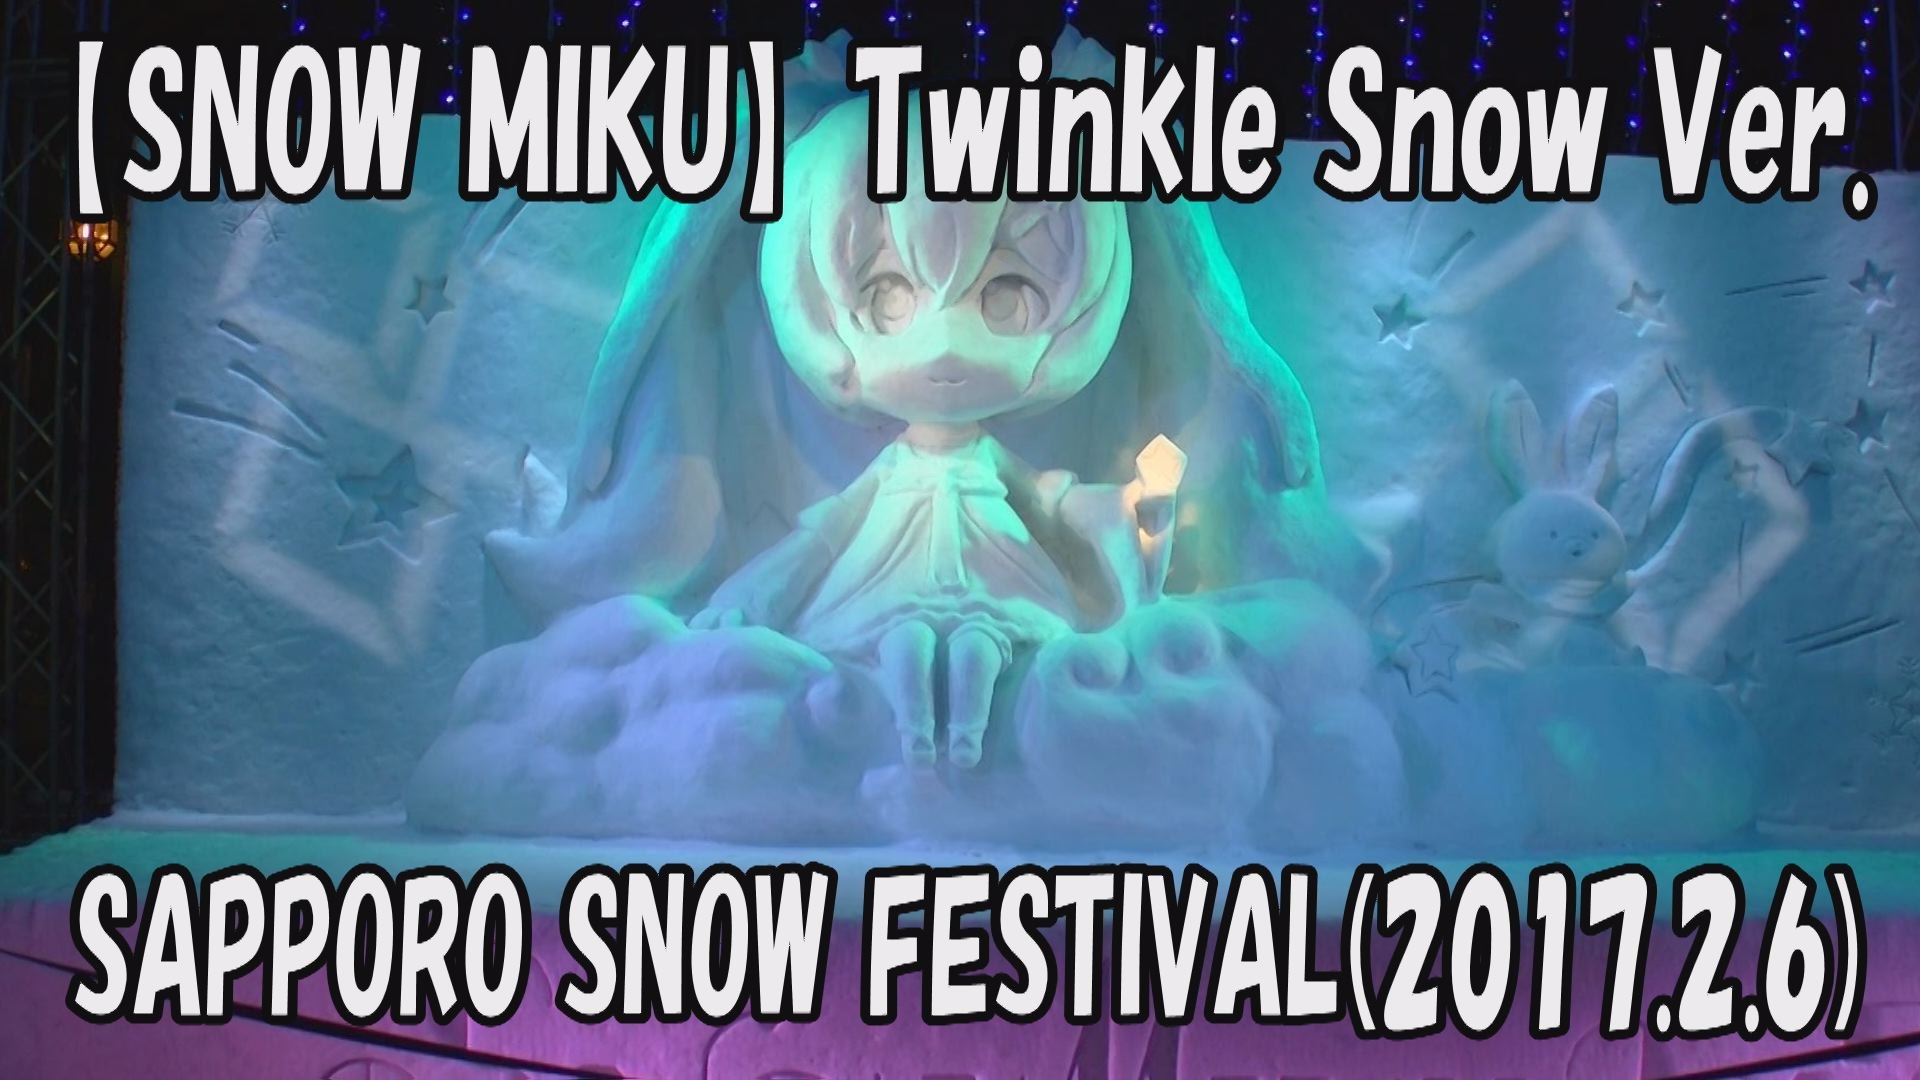 Sapporo Snow Festival 17 Snow Miku Hatsune Miku Star Night Stage Twinkle Snow Ver 17 2 6 動画 Dailymotion